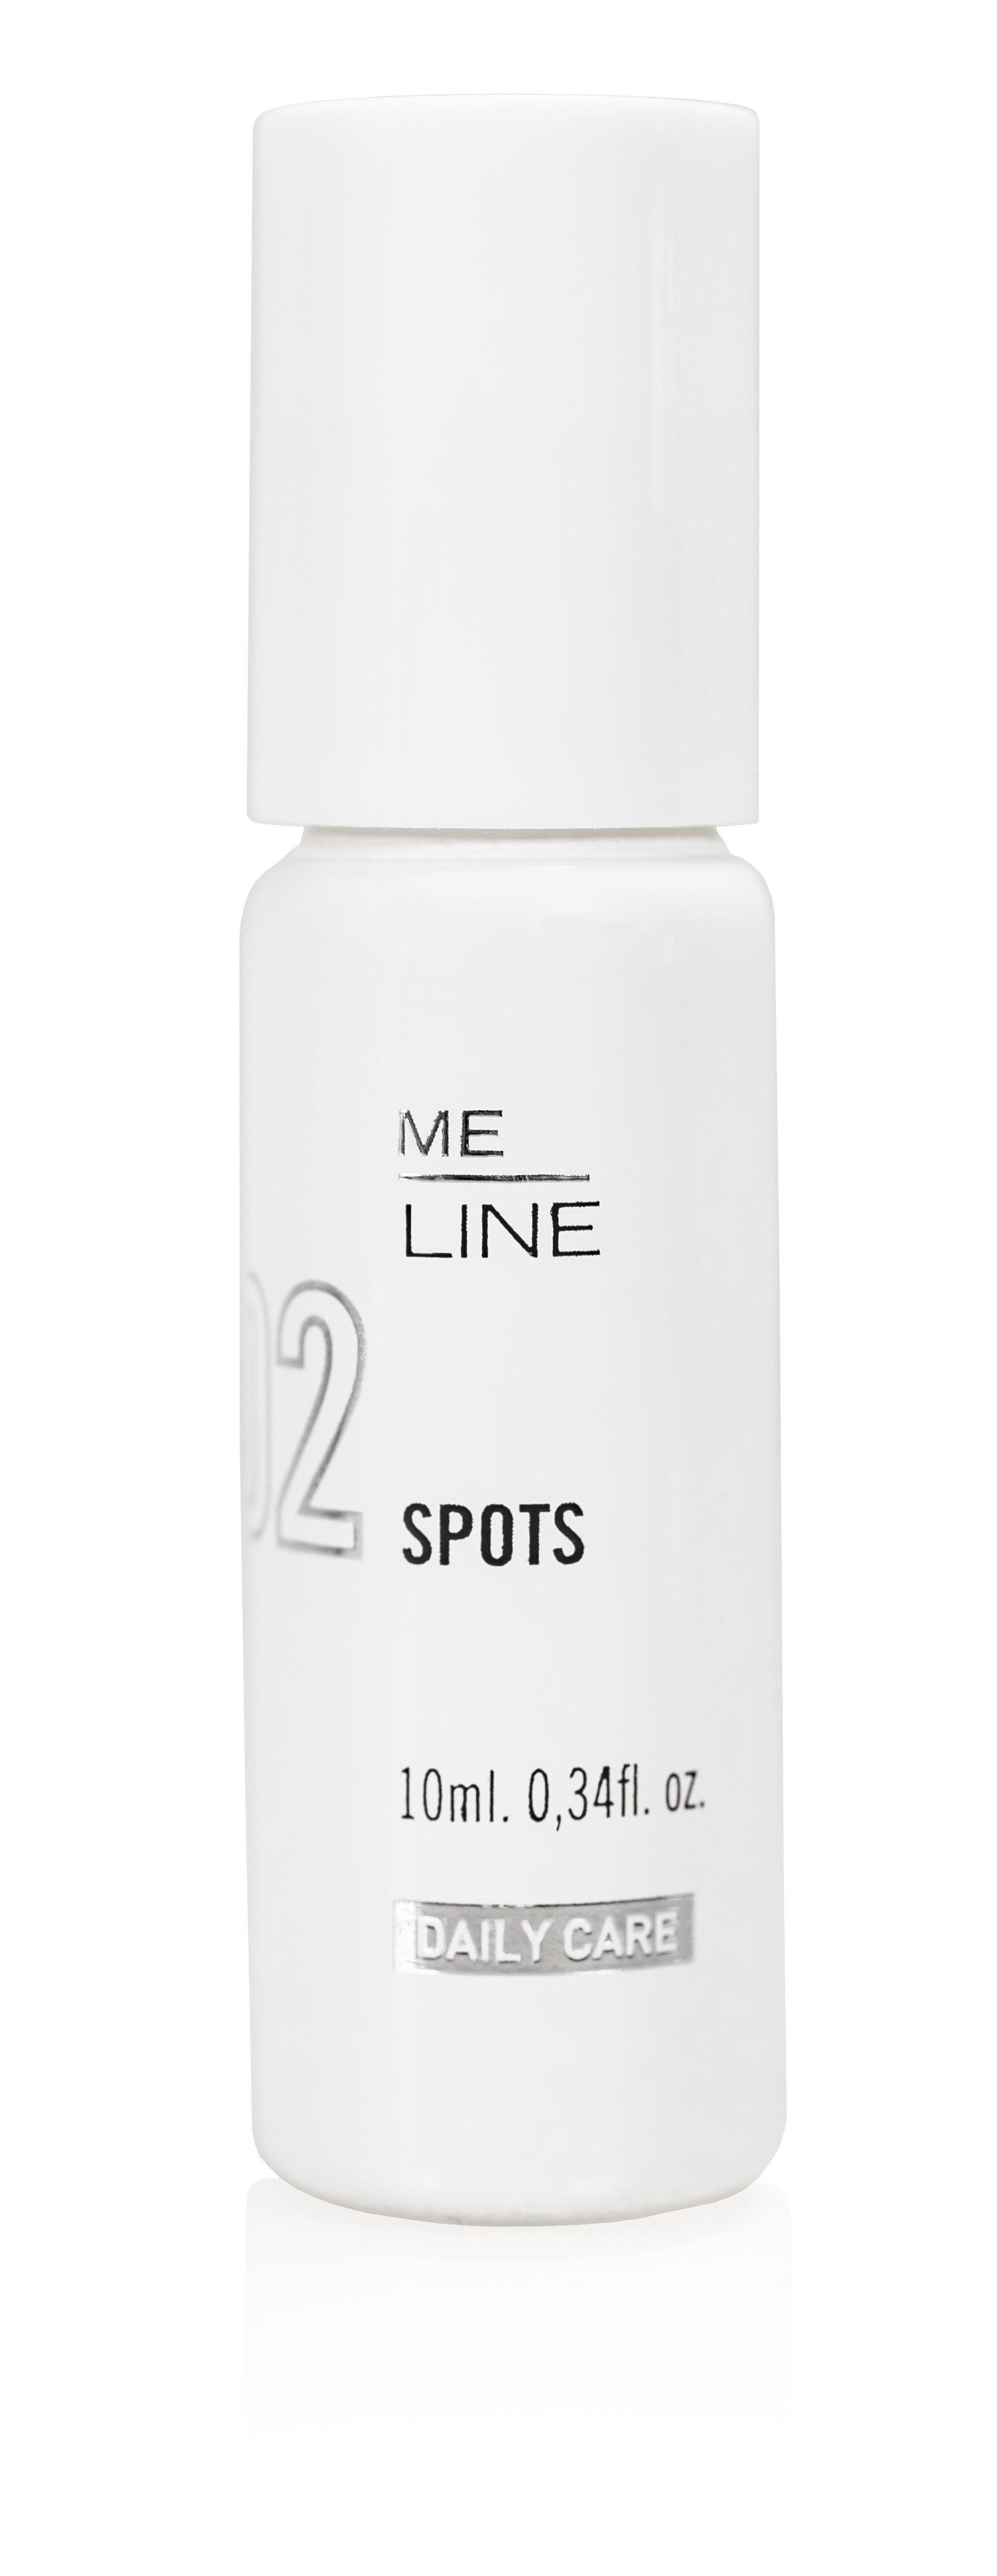 02 Meline Spots